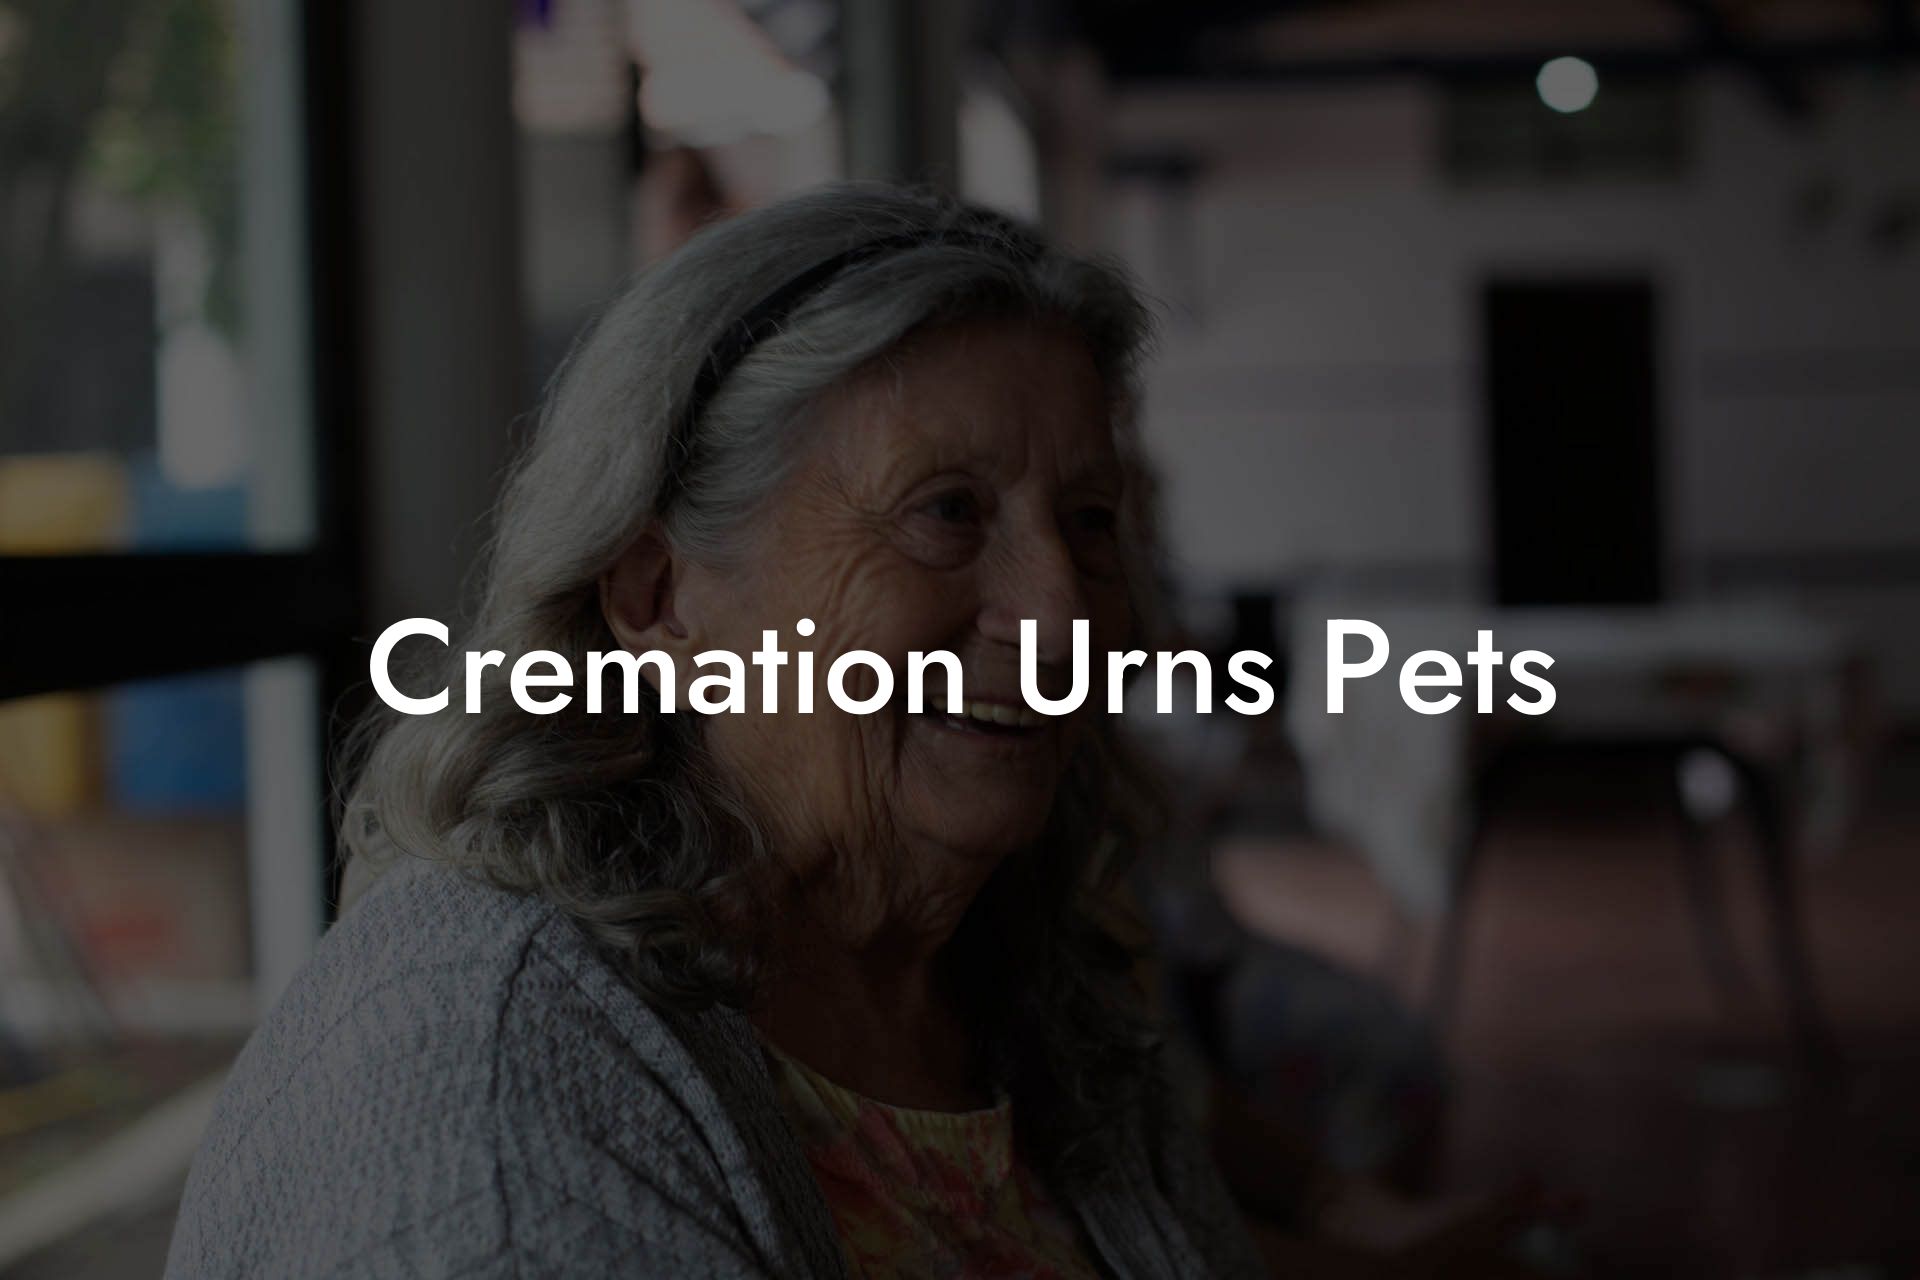 Cremation Urns Pets